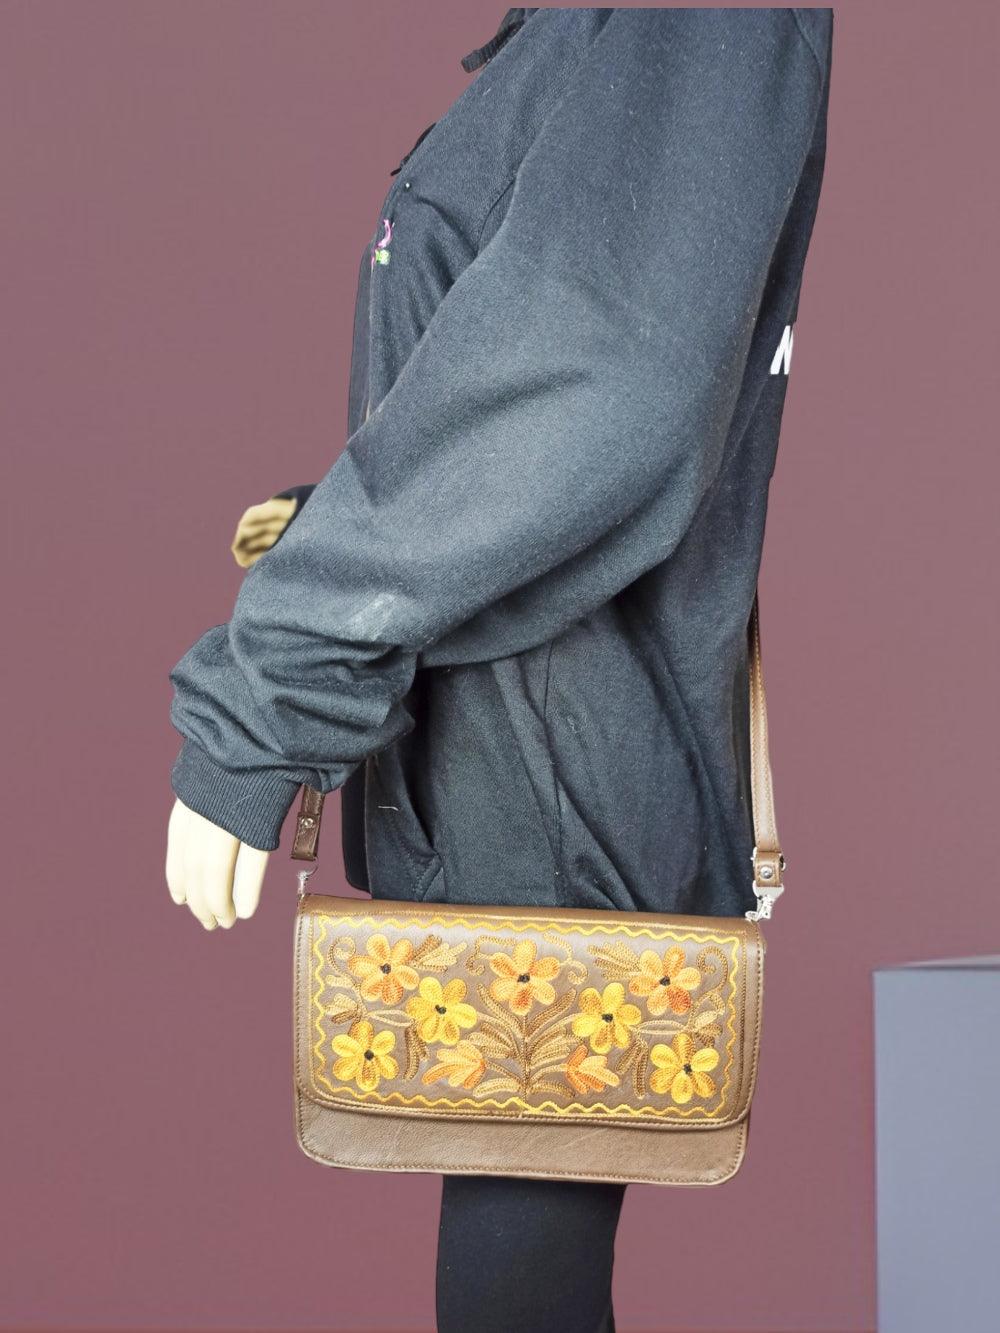 Leather Sling Bag | Aari Hand Clutch | 10" Big Clutch Leather - ZANSKAR ARTS